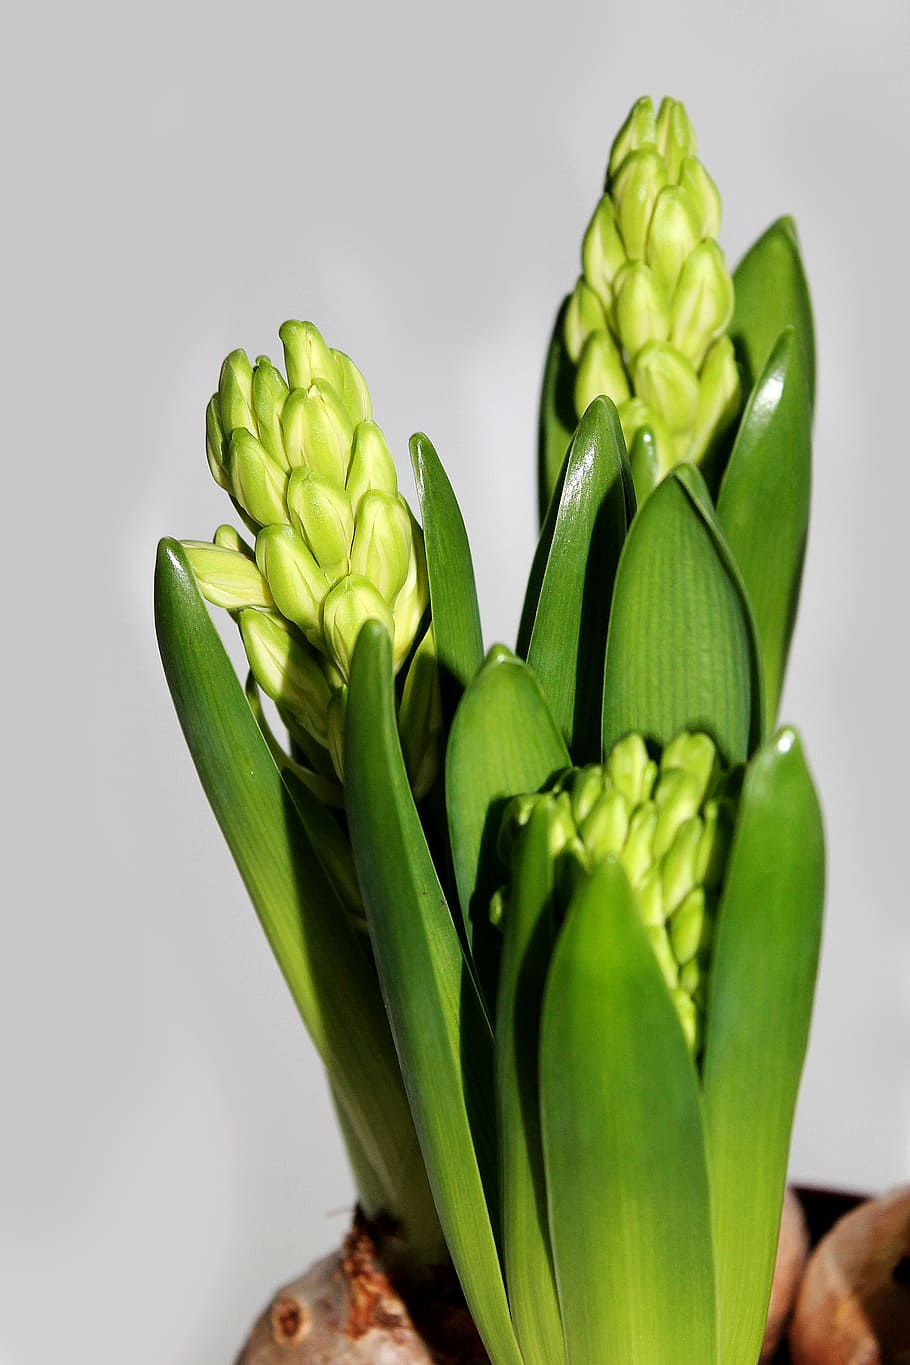 Hyacinth, Hyacinths, Flowers, flower bulbs, spring, green, nature, green Color, food, freshness